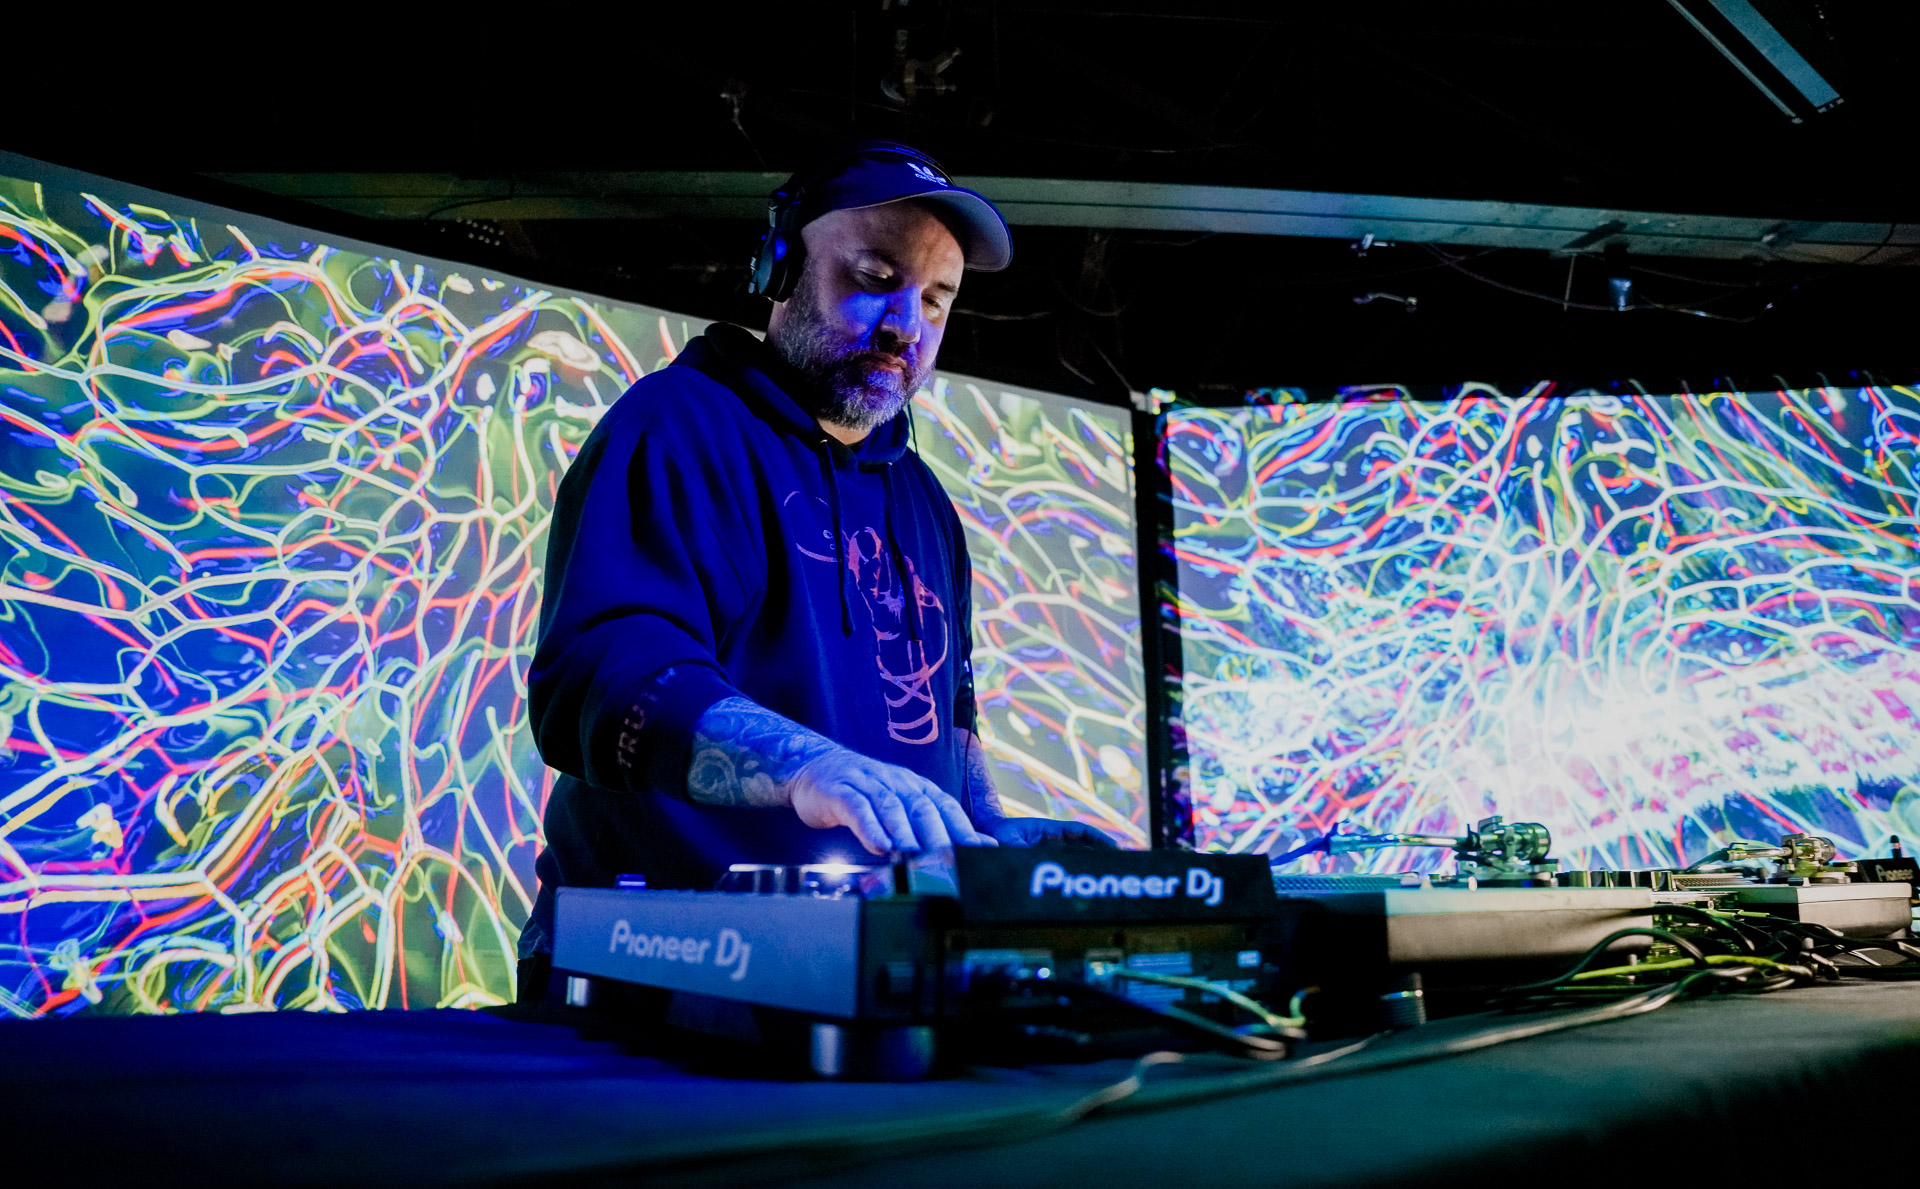 A DJ on stage